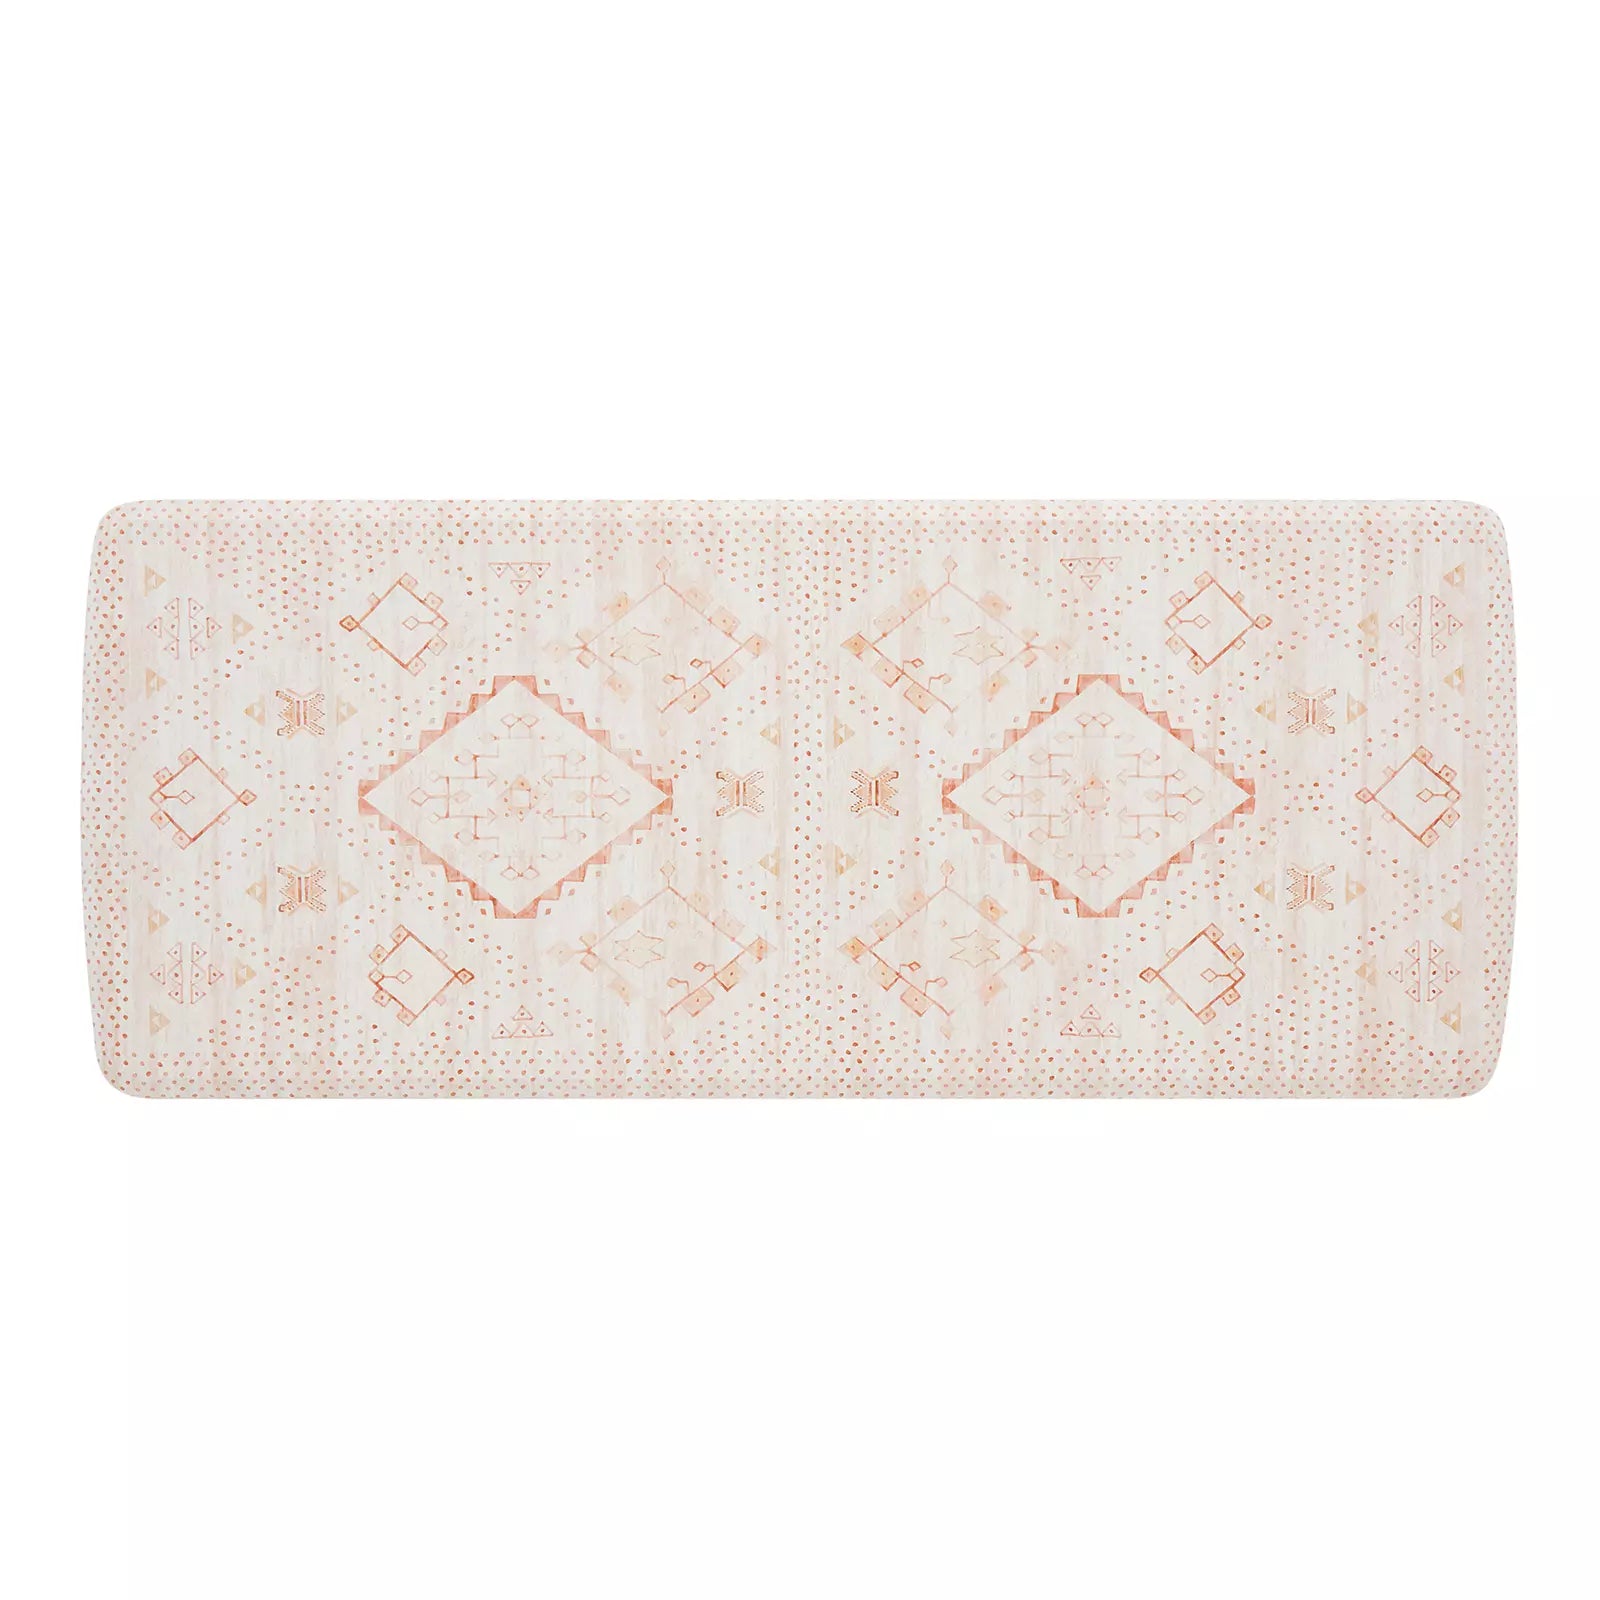 Overhead shot of the Ula Desert Clay terracotta Minimal Boho Pattern anti-fatigue kitchen mat in size 30x72